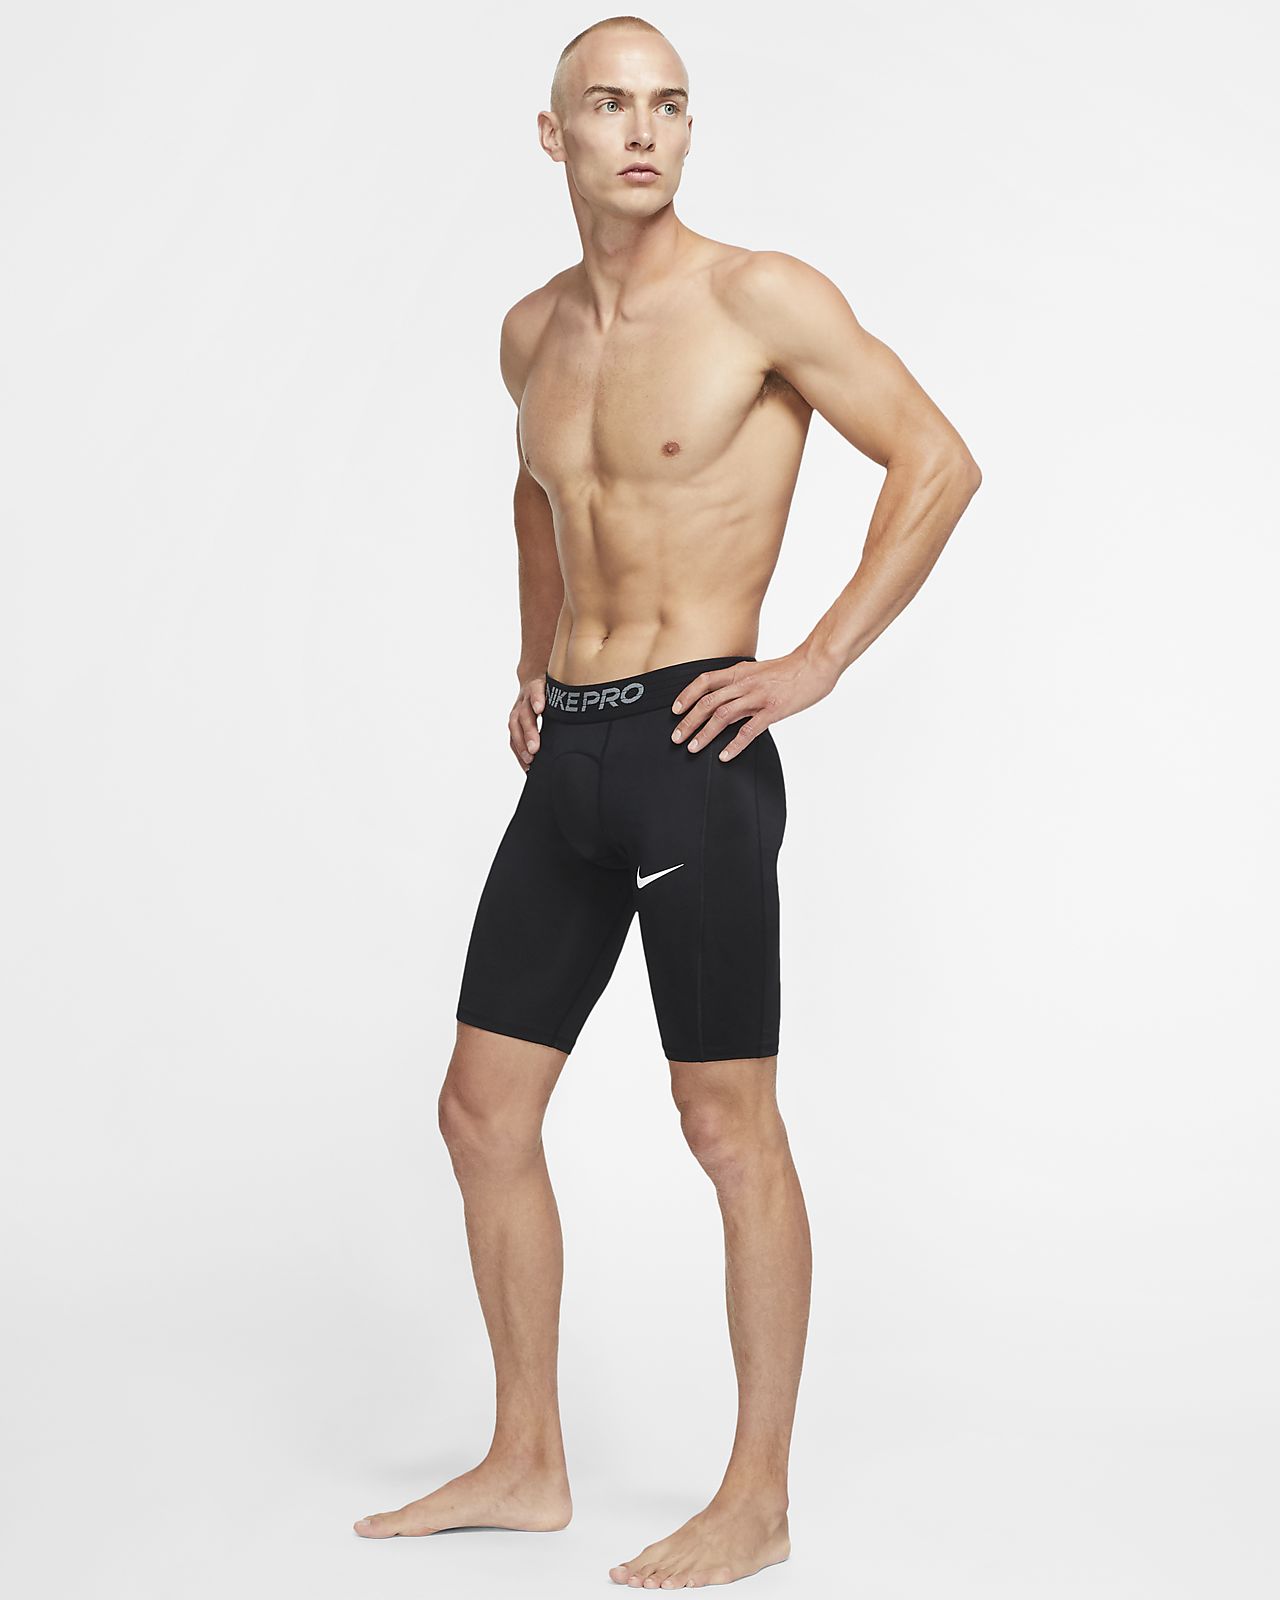 nike pro men's compression shorts